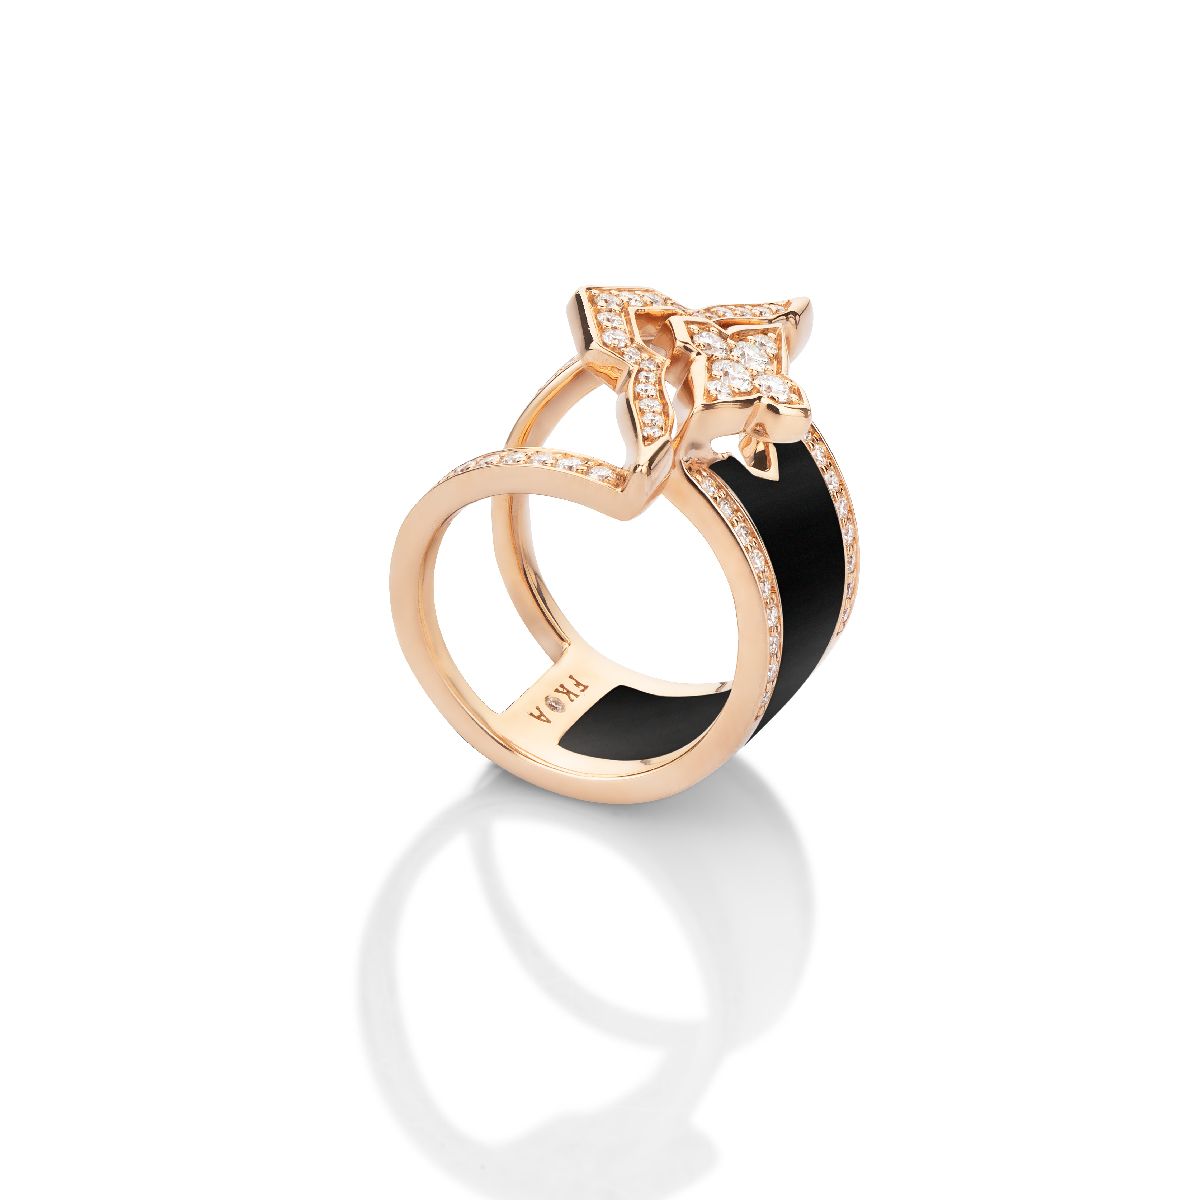 8MM Black Ceramic Ring with Bevel Edge - Triton Jewelry